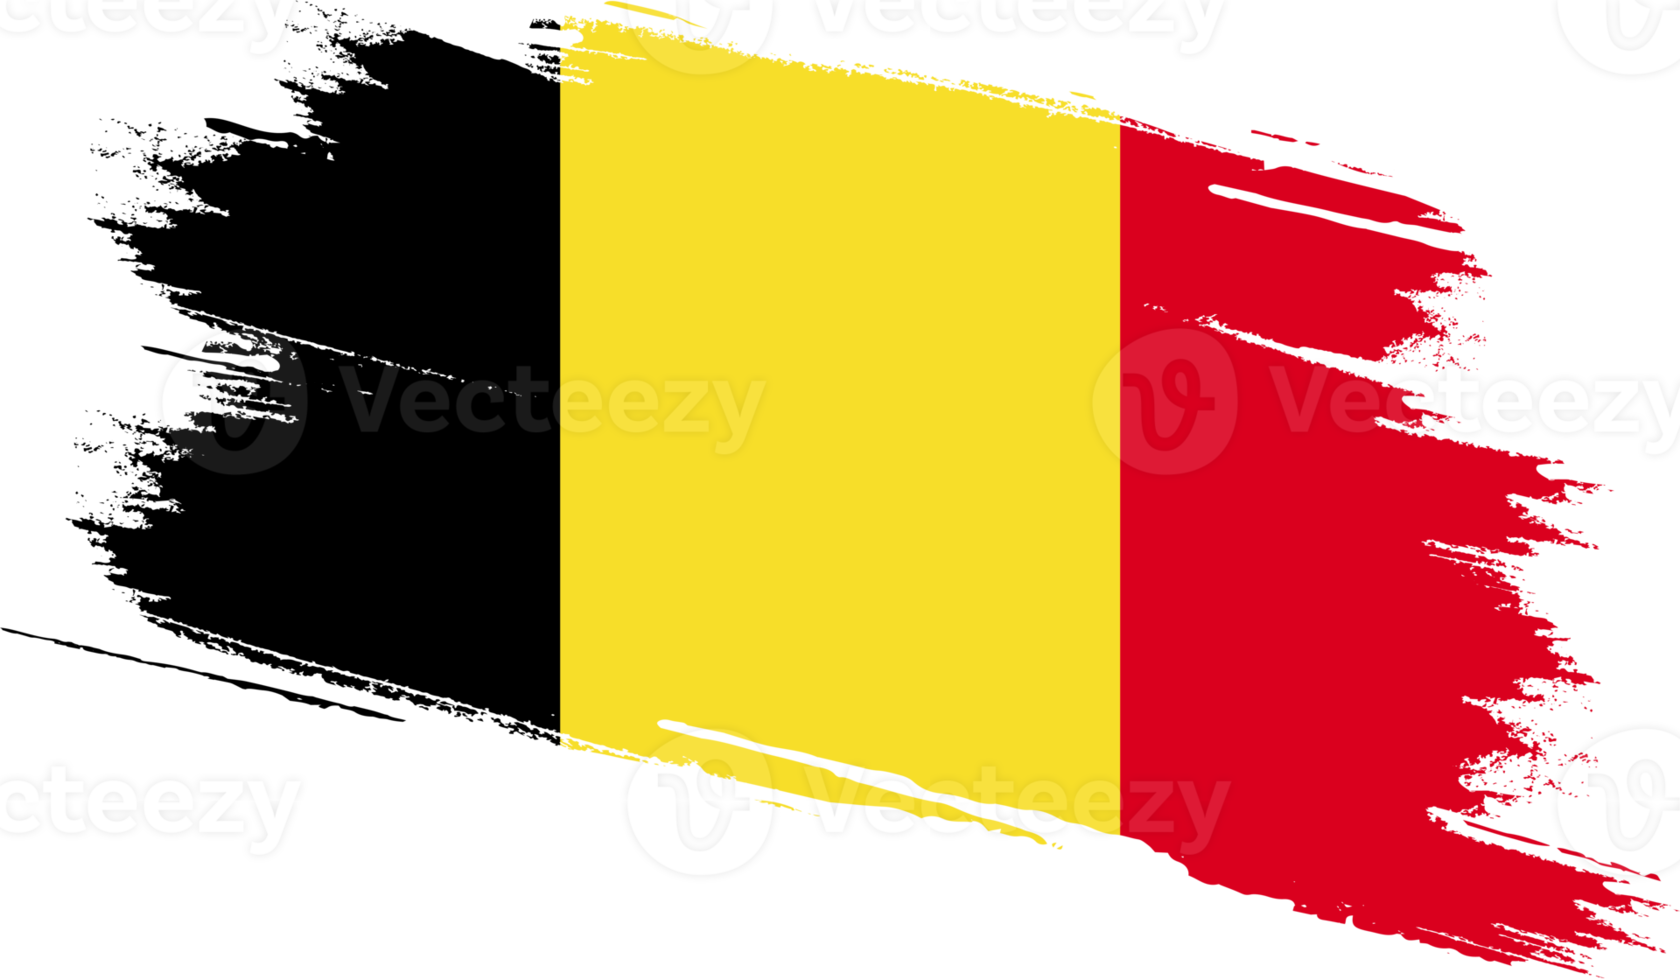 Belgien-Flagge mit Grunge-Textur png